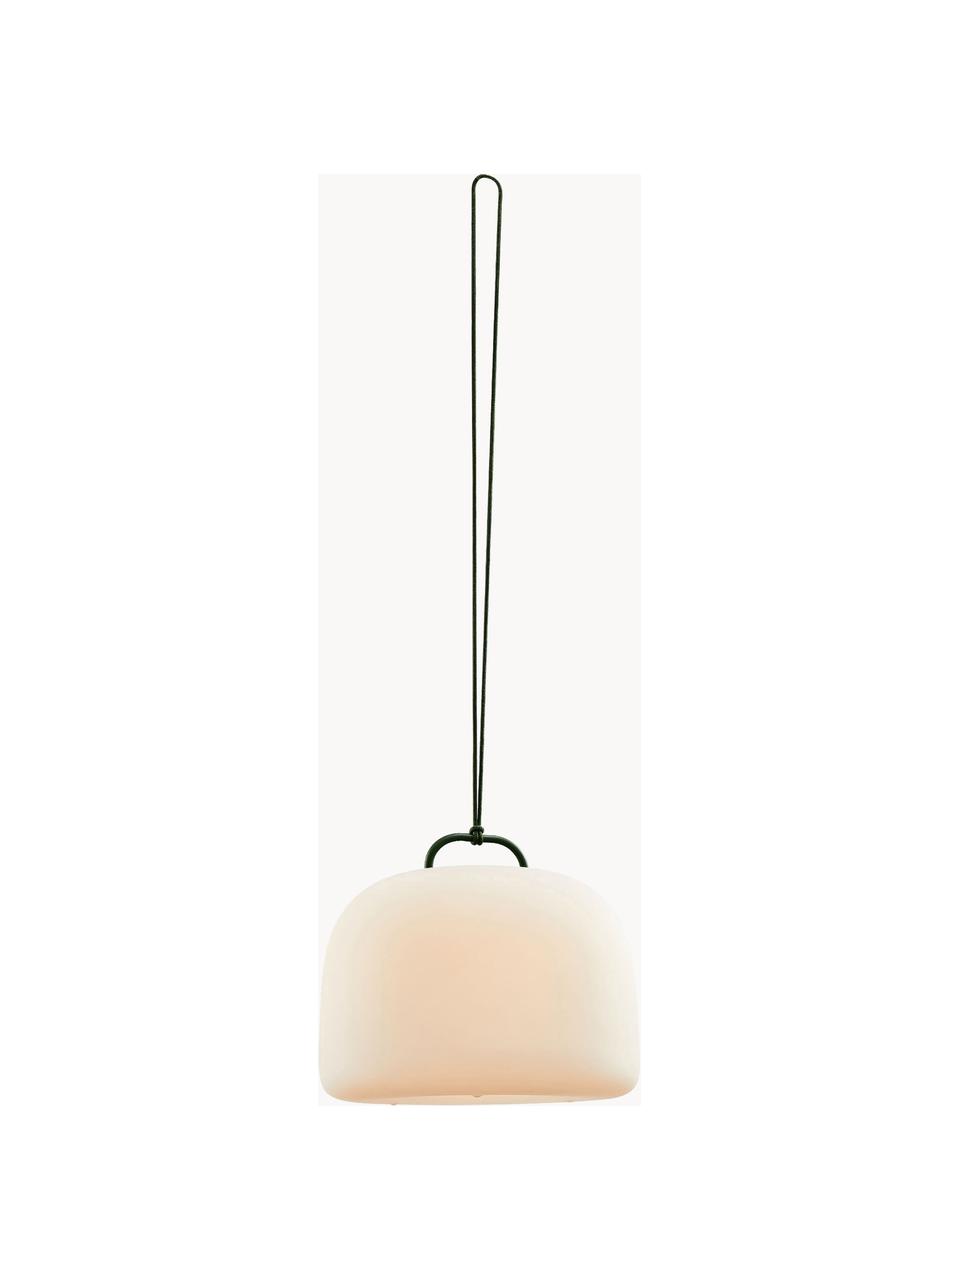 Lámpara de techo para exterior LED regulable Kettle, portátil, Lámpara: plástico, Blanco crema,verde oscuro, Ø 36 x Al 31 cm